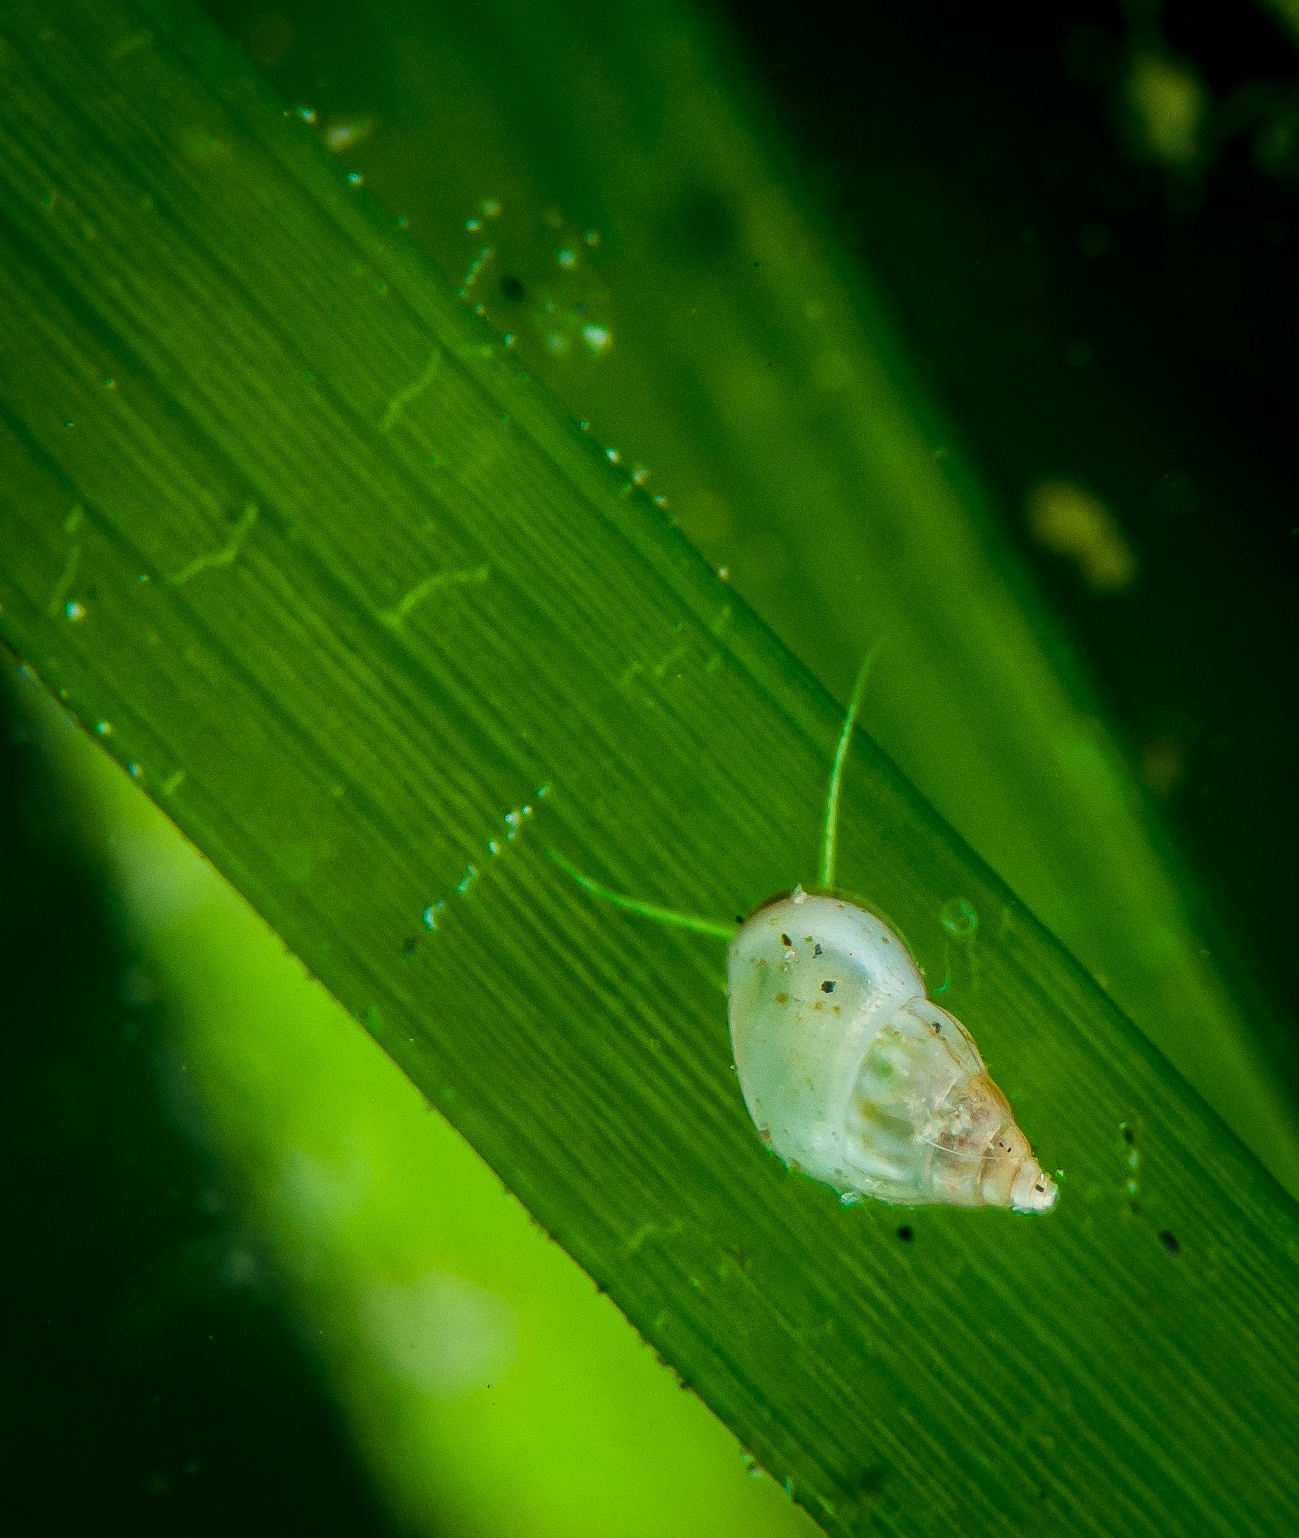 Close-up photo of a small gastropod sitting on a Zostera marina eelgrass leaf in Gullmarsfjord, Swedish west coast.